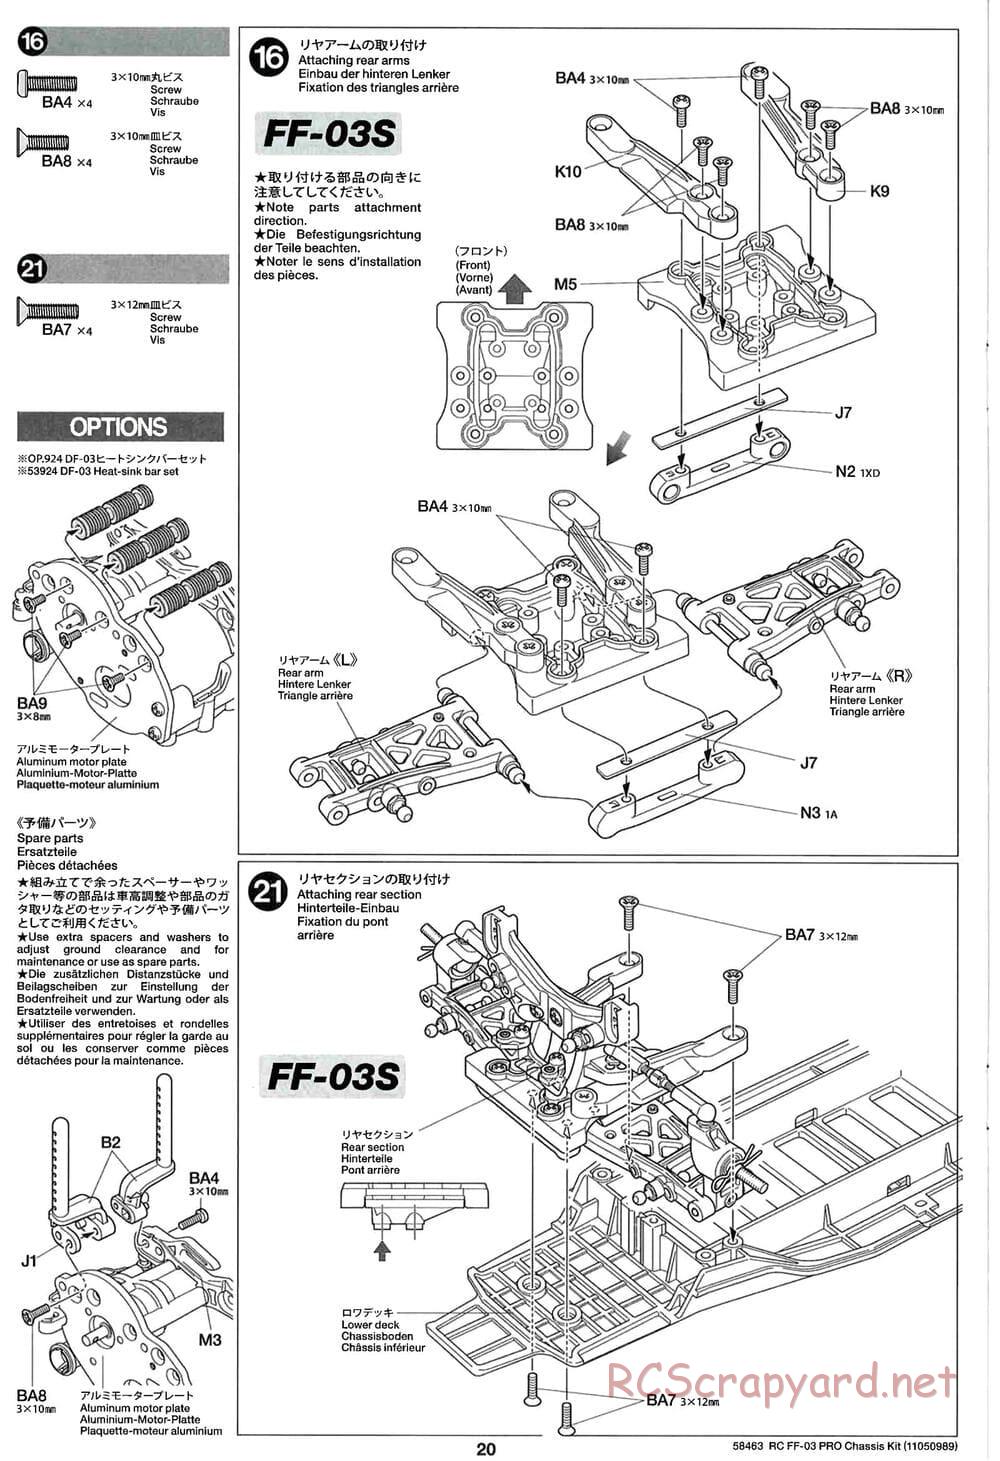 Tamiya - FF-03 Pro Chassis - Manual - Page 20